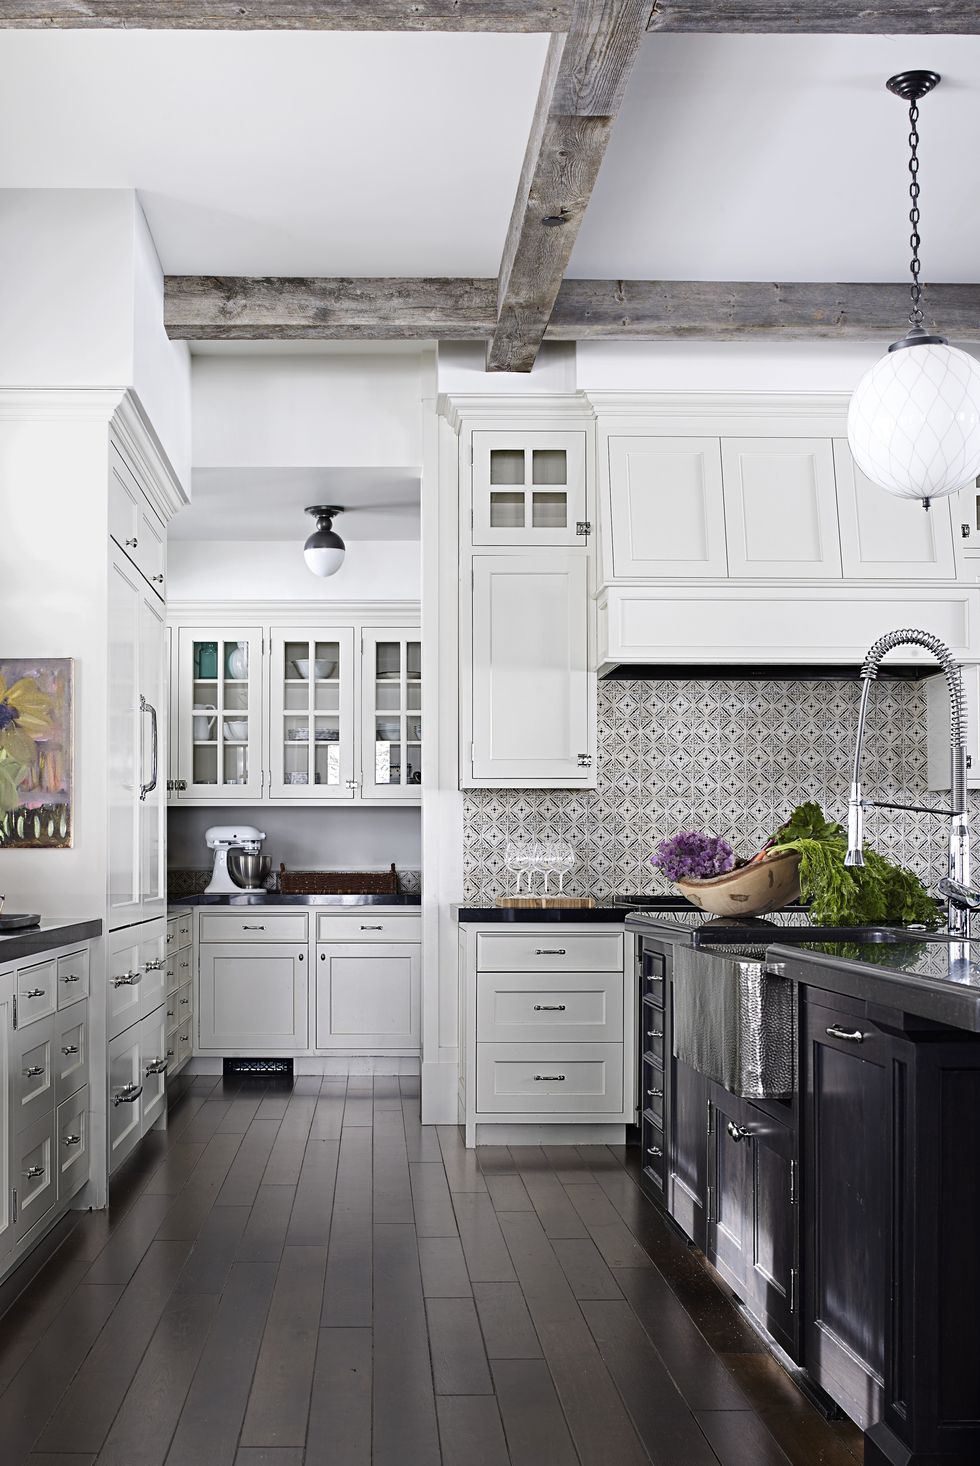 39+ Latest Modern Kitchen Backsplash Designs 2020 Pictures - House